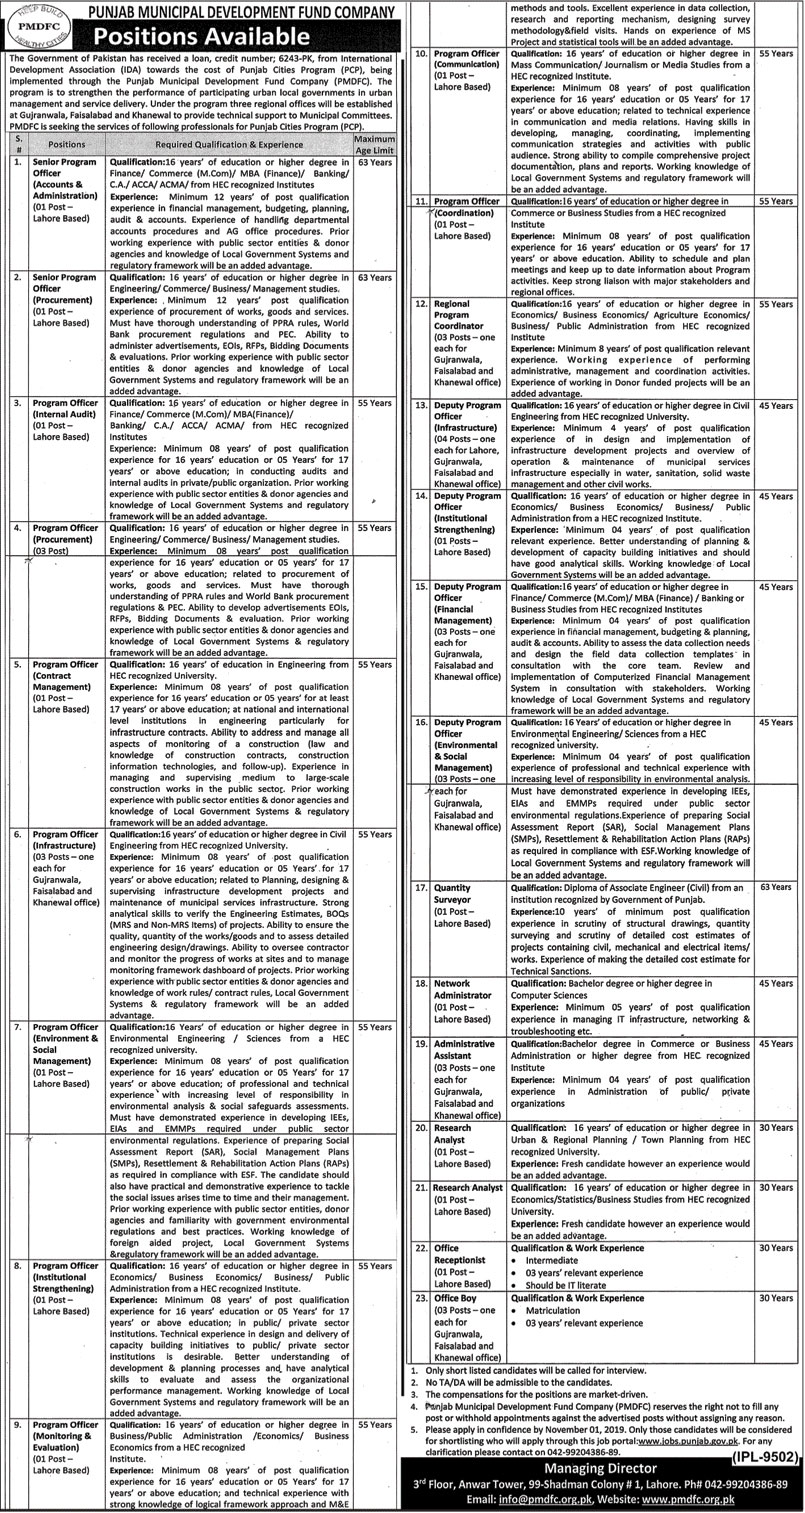 Jobs In Punjab Municipal Development Fund Company PMDFC 17 October 2019